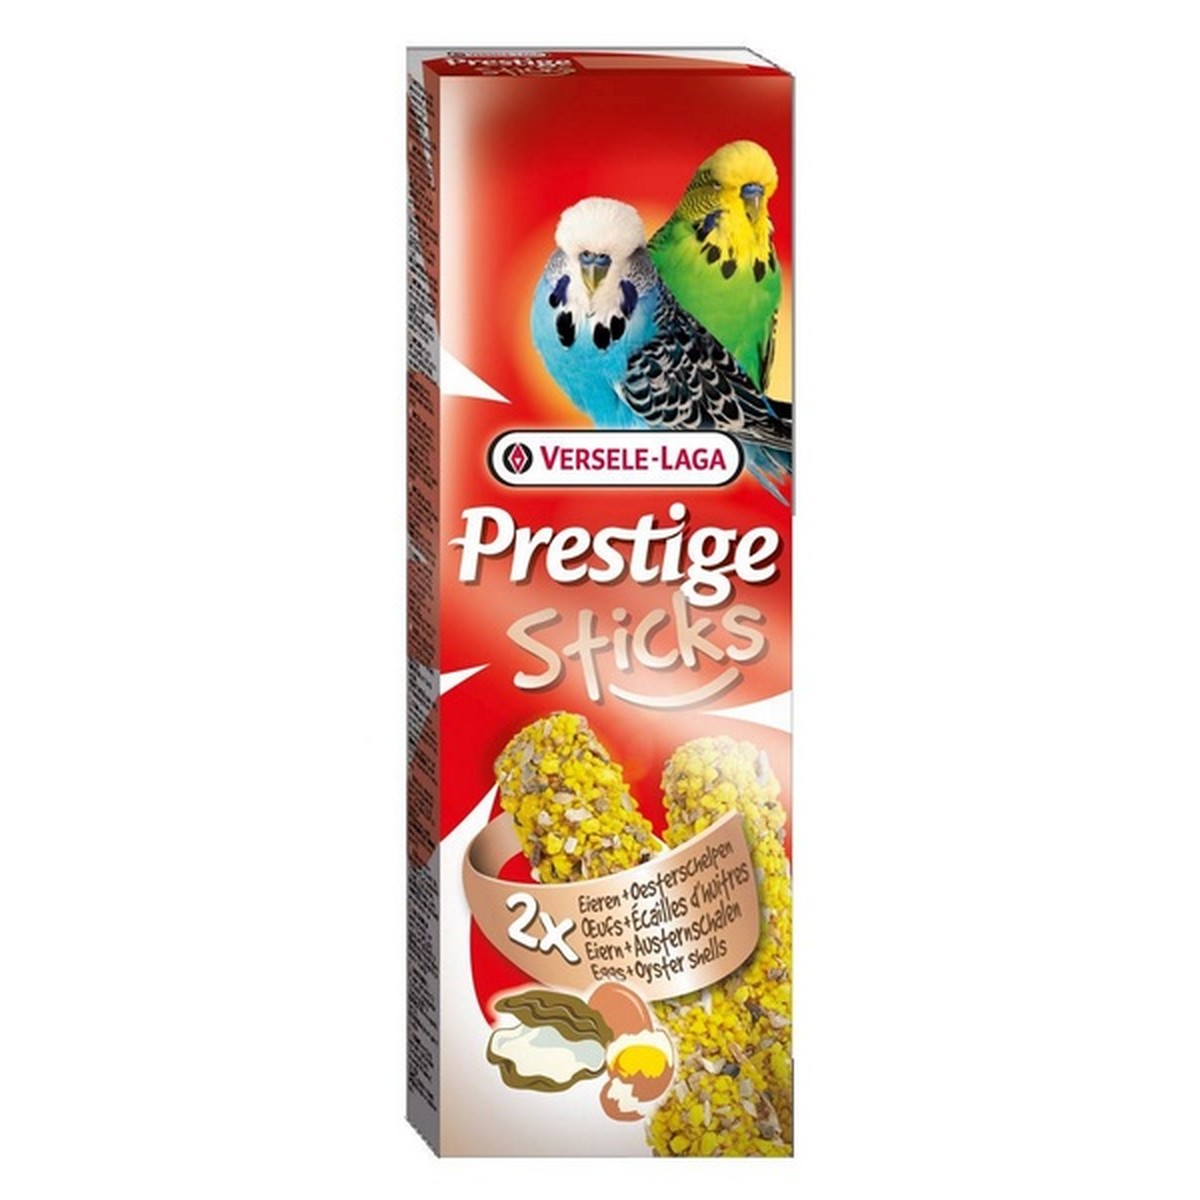   Prestige Sticks Perruches Oeufs&Ecailles huîtres  60g